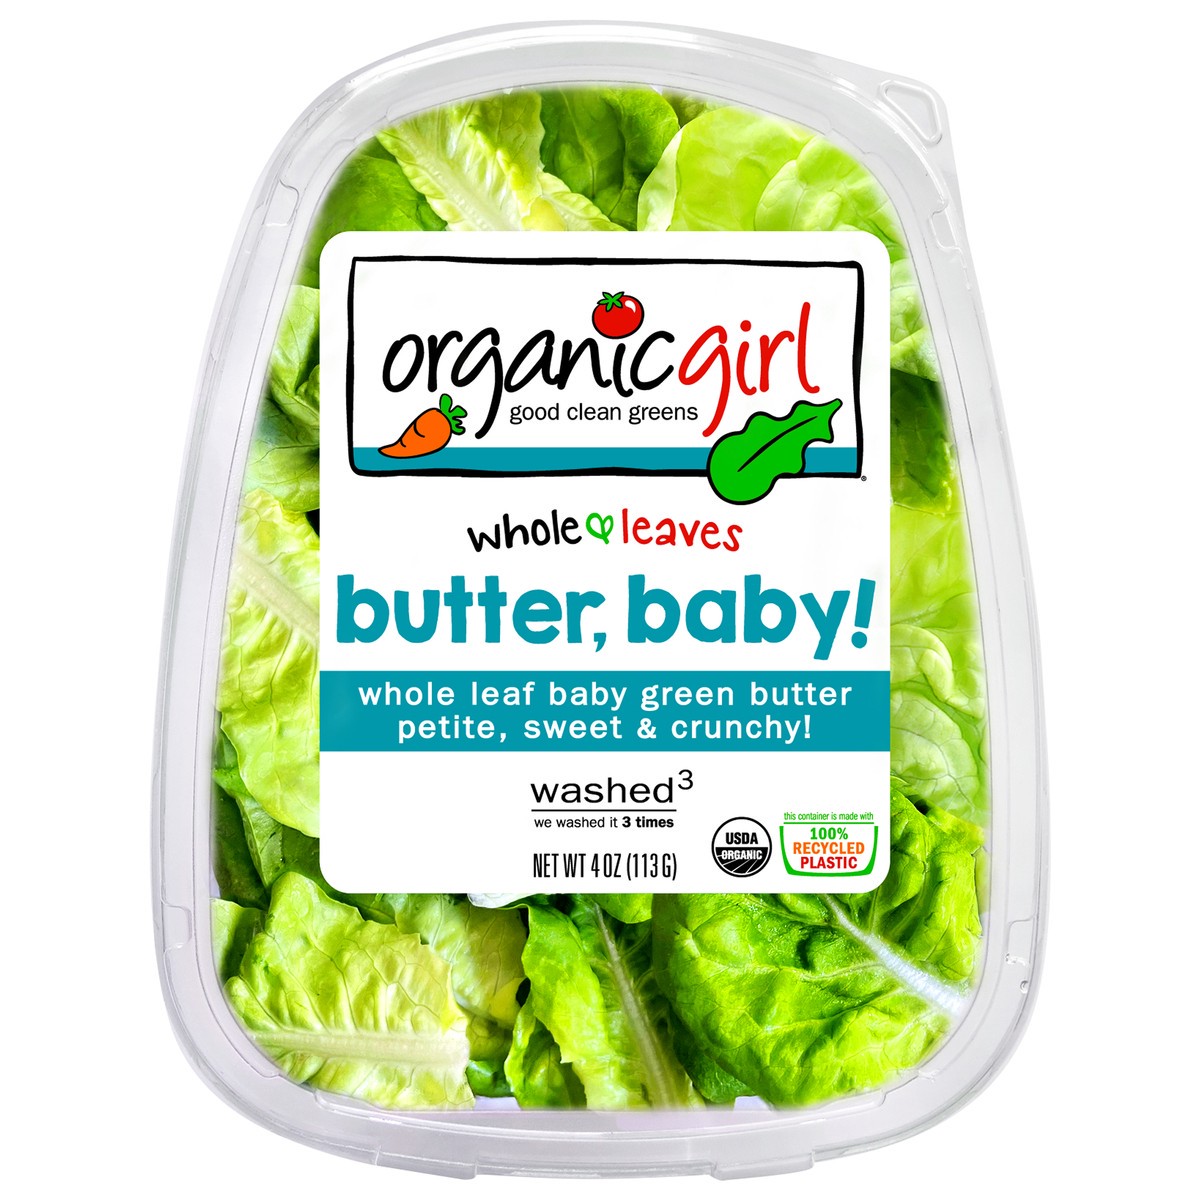 slide 1 of 3, Organic Girl Whole Leaves Butter, Baby! 4 oz, 4 oz